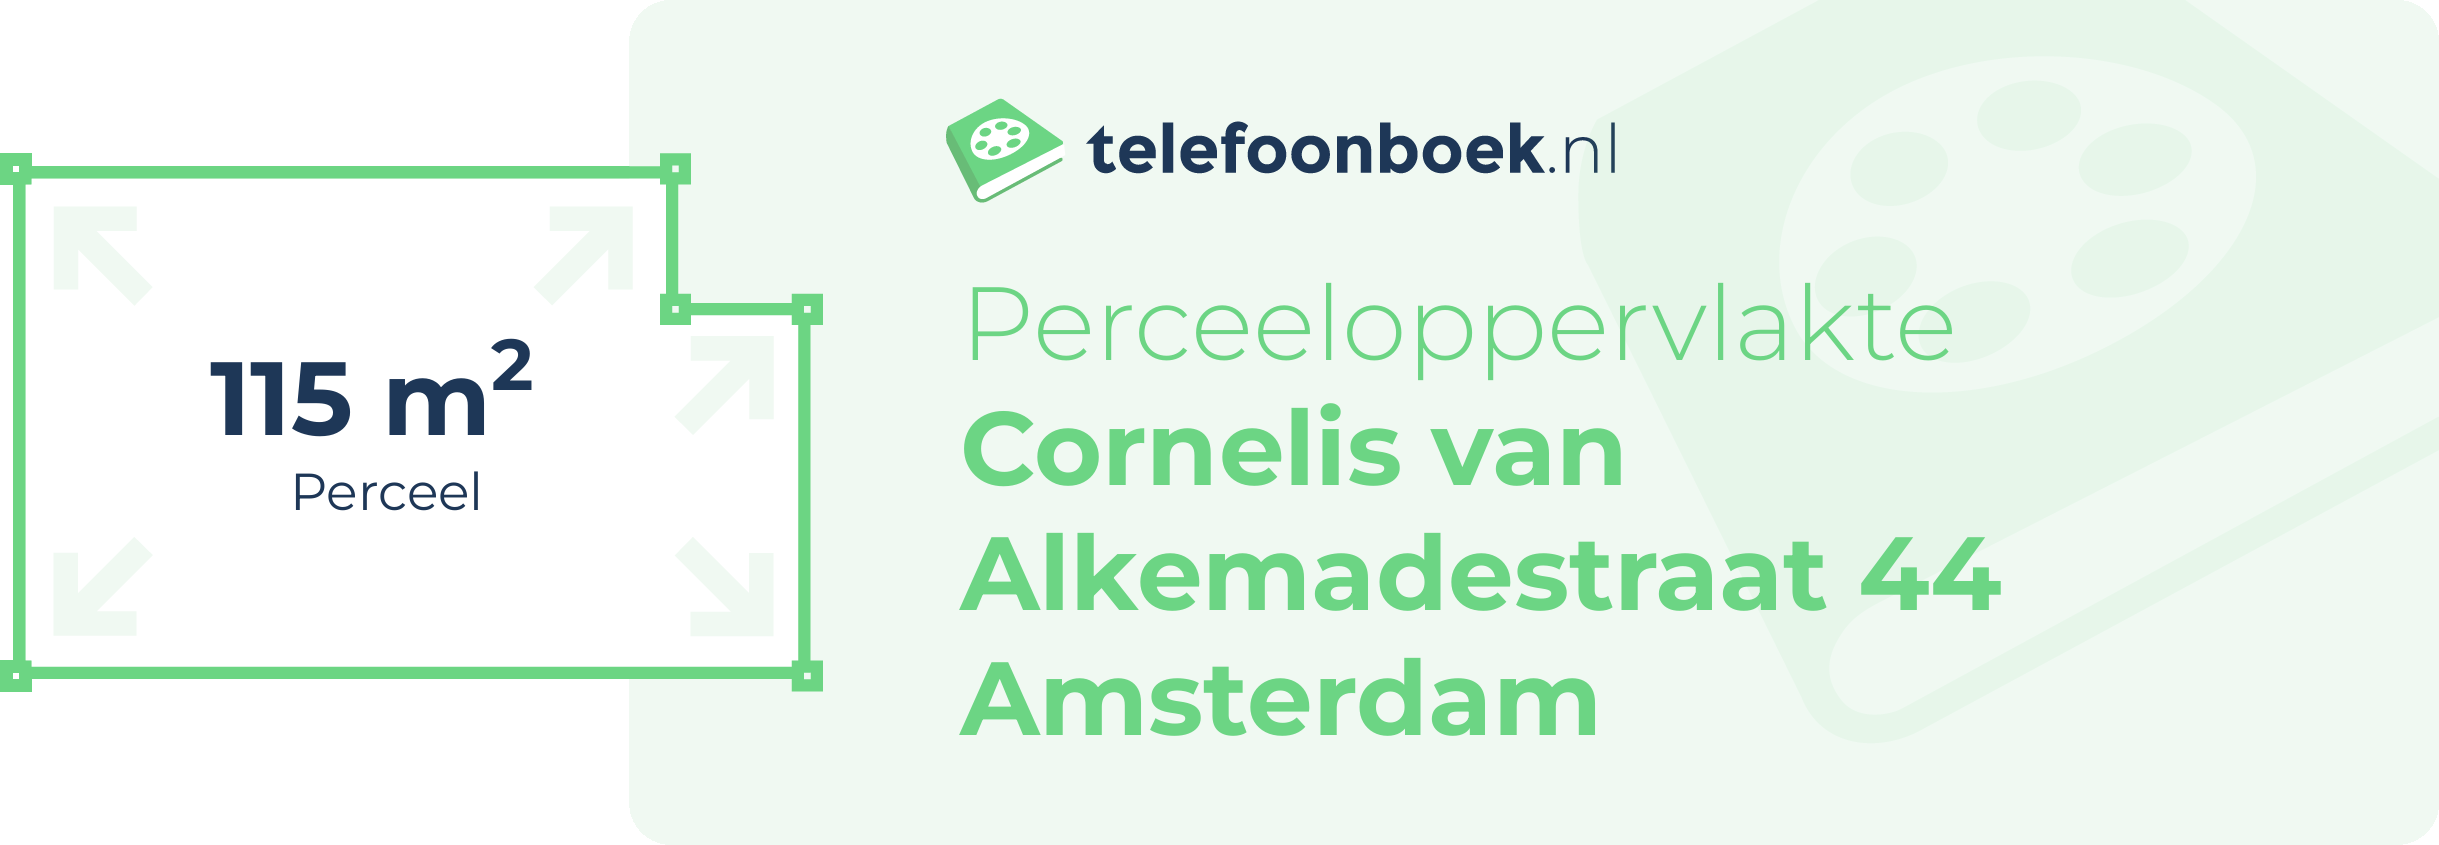 Perceeloppervlakte Cornelis Van Alkemadestraat 44 Amsterdam